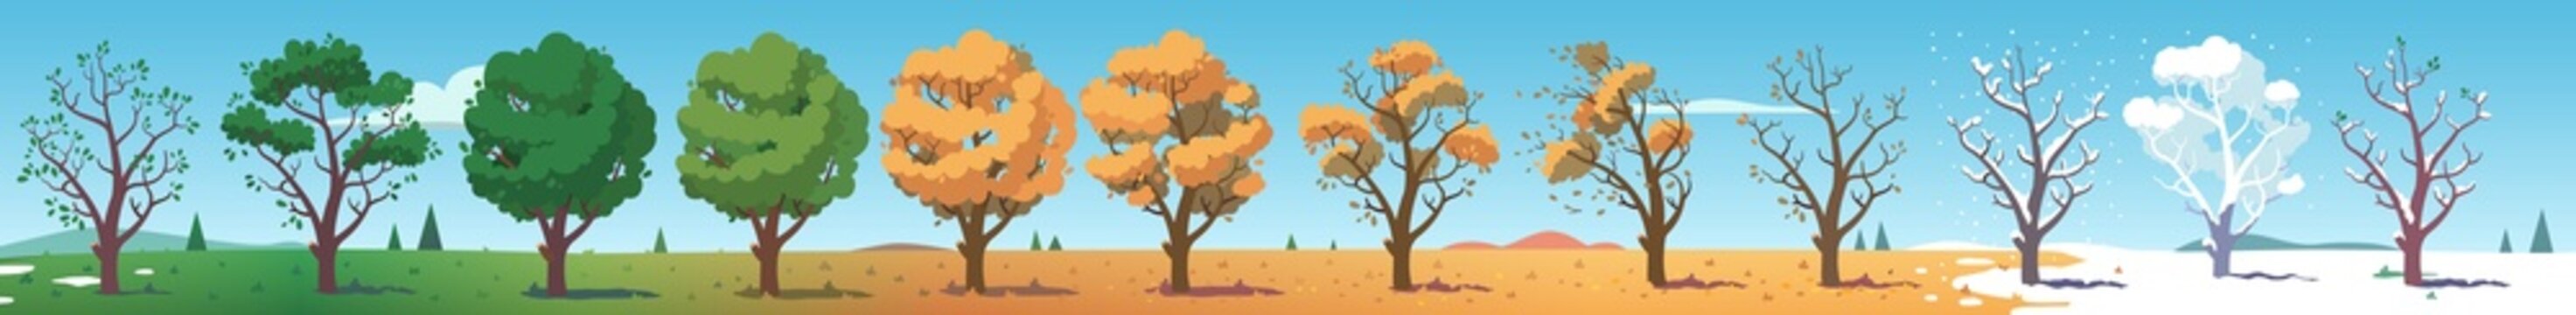 All four seasons tree plant cycle landscape set